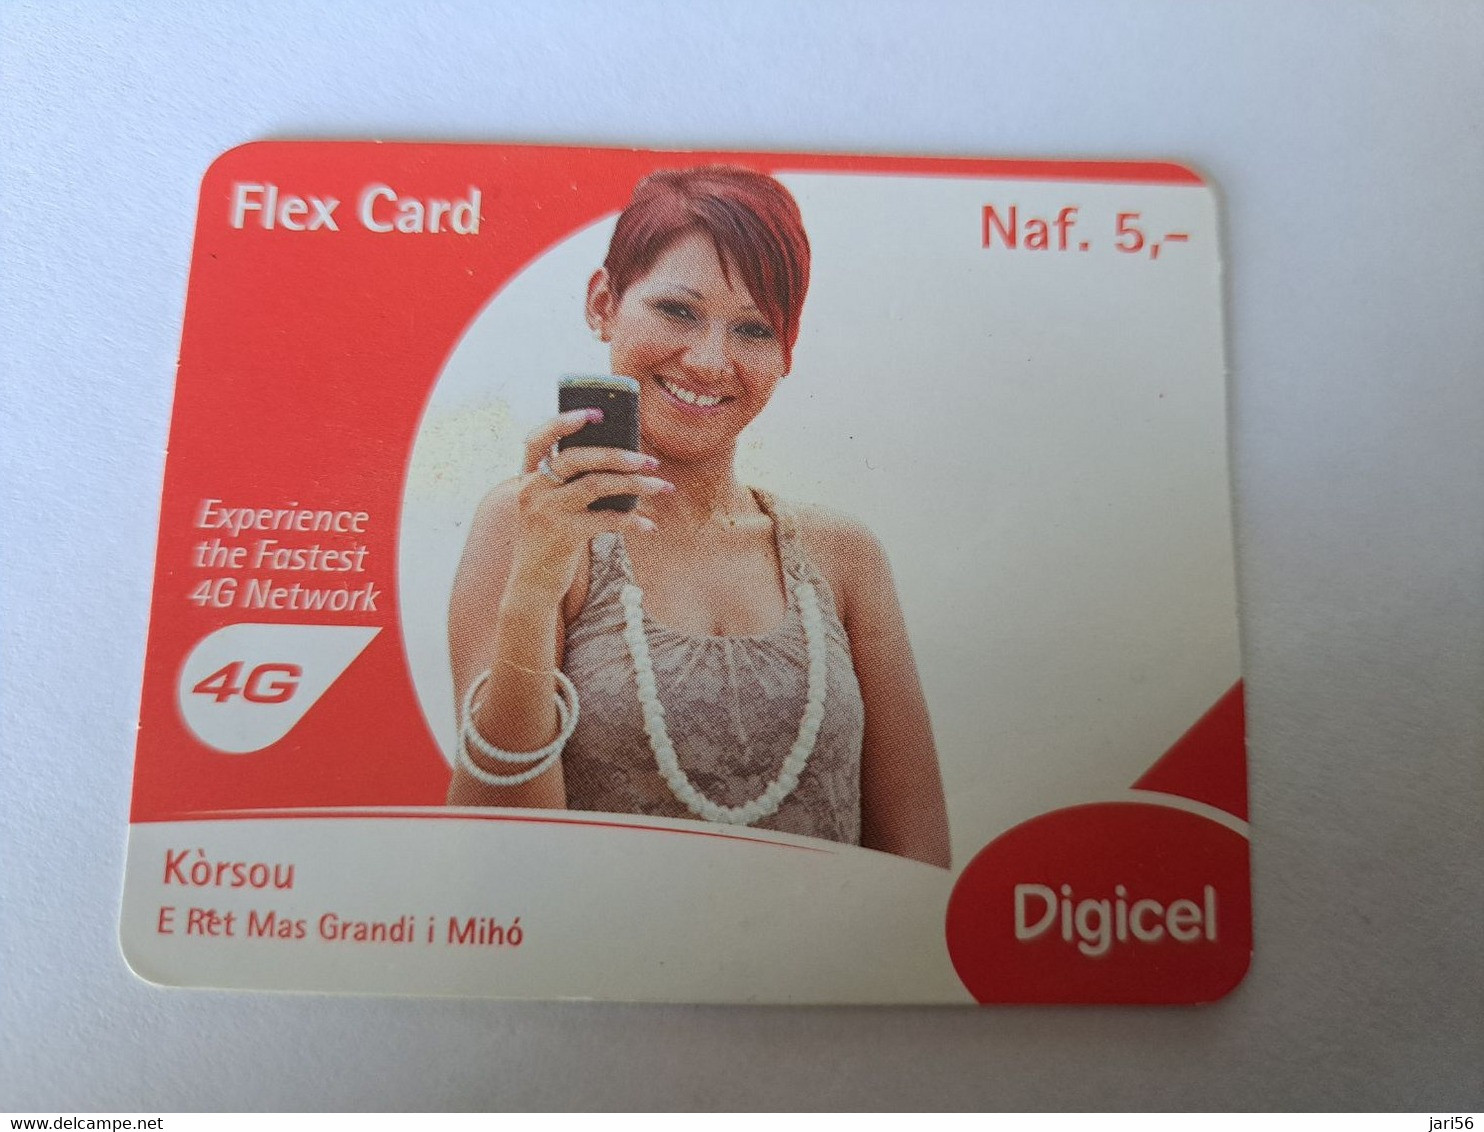 CURACAO  DIGICEL FLEX CARD  NAF 5,-  LADY ON PHONE    DATE 30/06/2013   VERY FINE USED CARD        ** 12087** - Antilles (Netherlands)